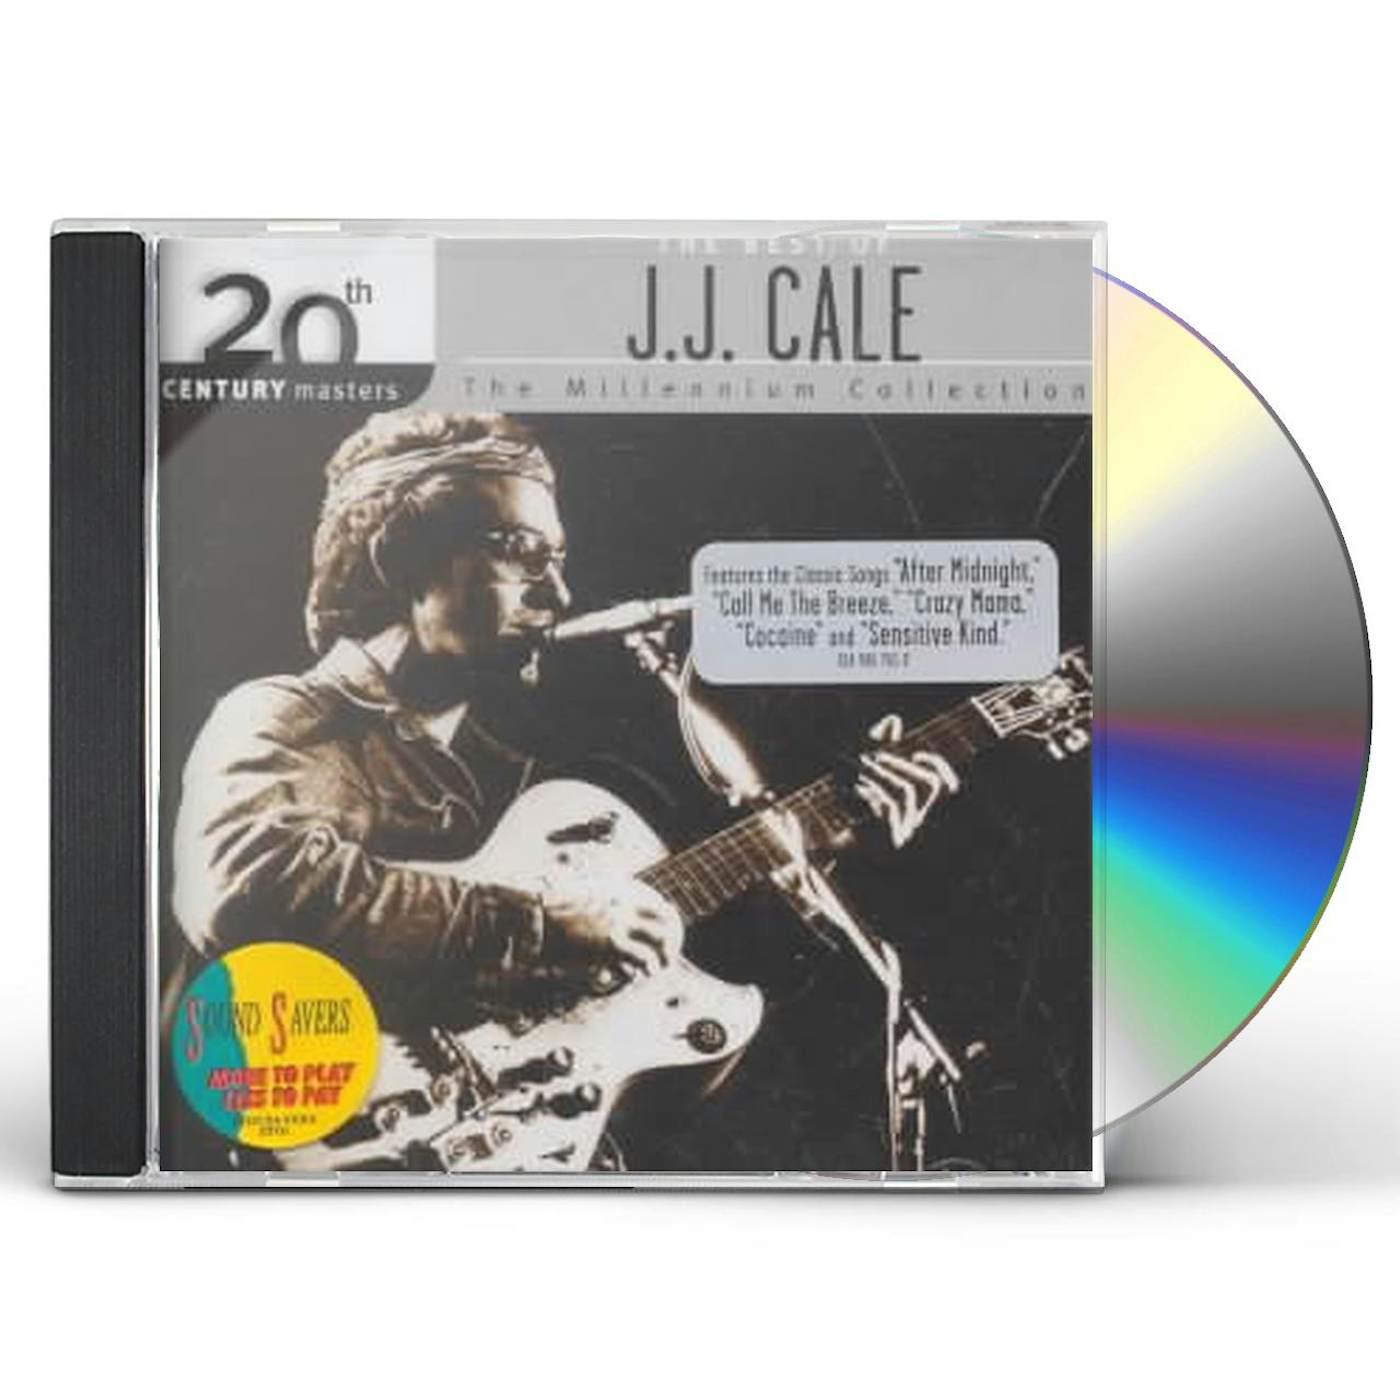 J.J. Cale 20TH CENTURY MASTERS: MILLENNIUM COLLECTION CD